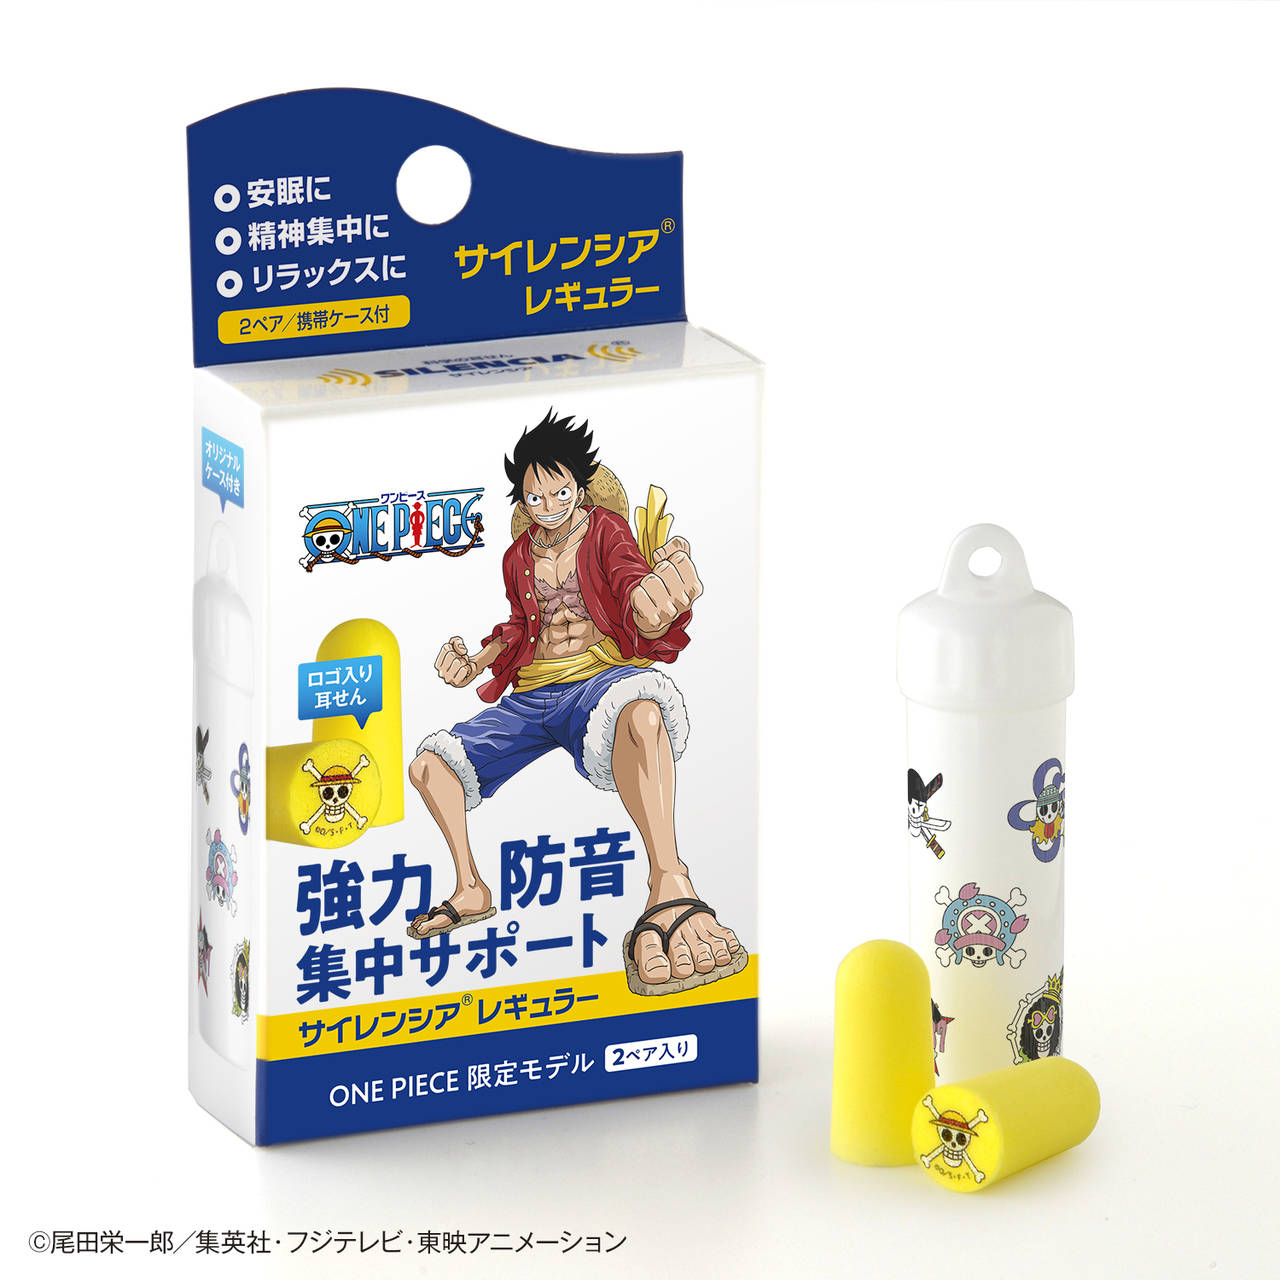 One Piece が国内トップの耳栓ブランドとコラボ 期間限定のオリジナル商品登場 Numan